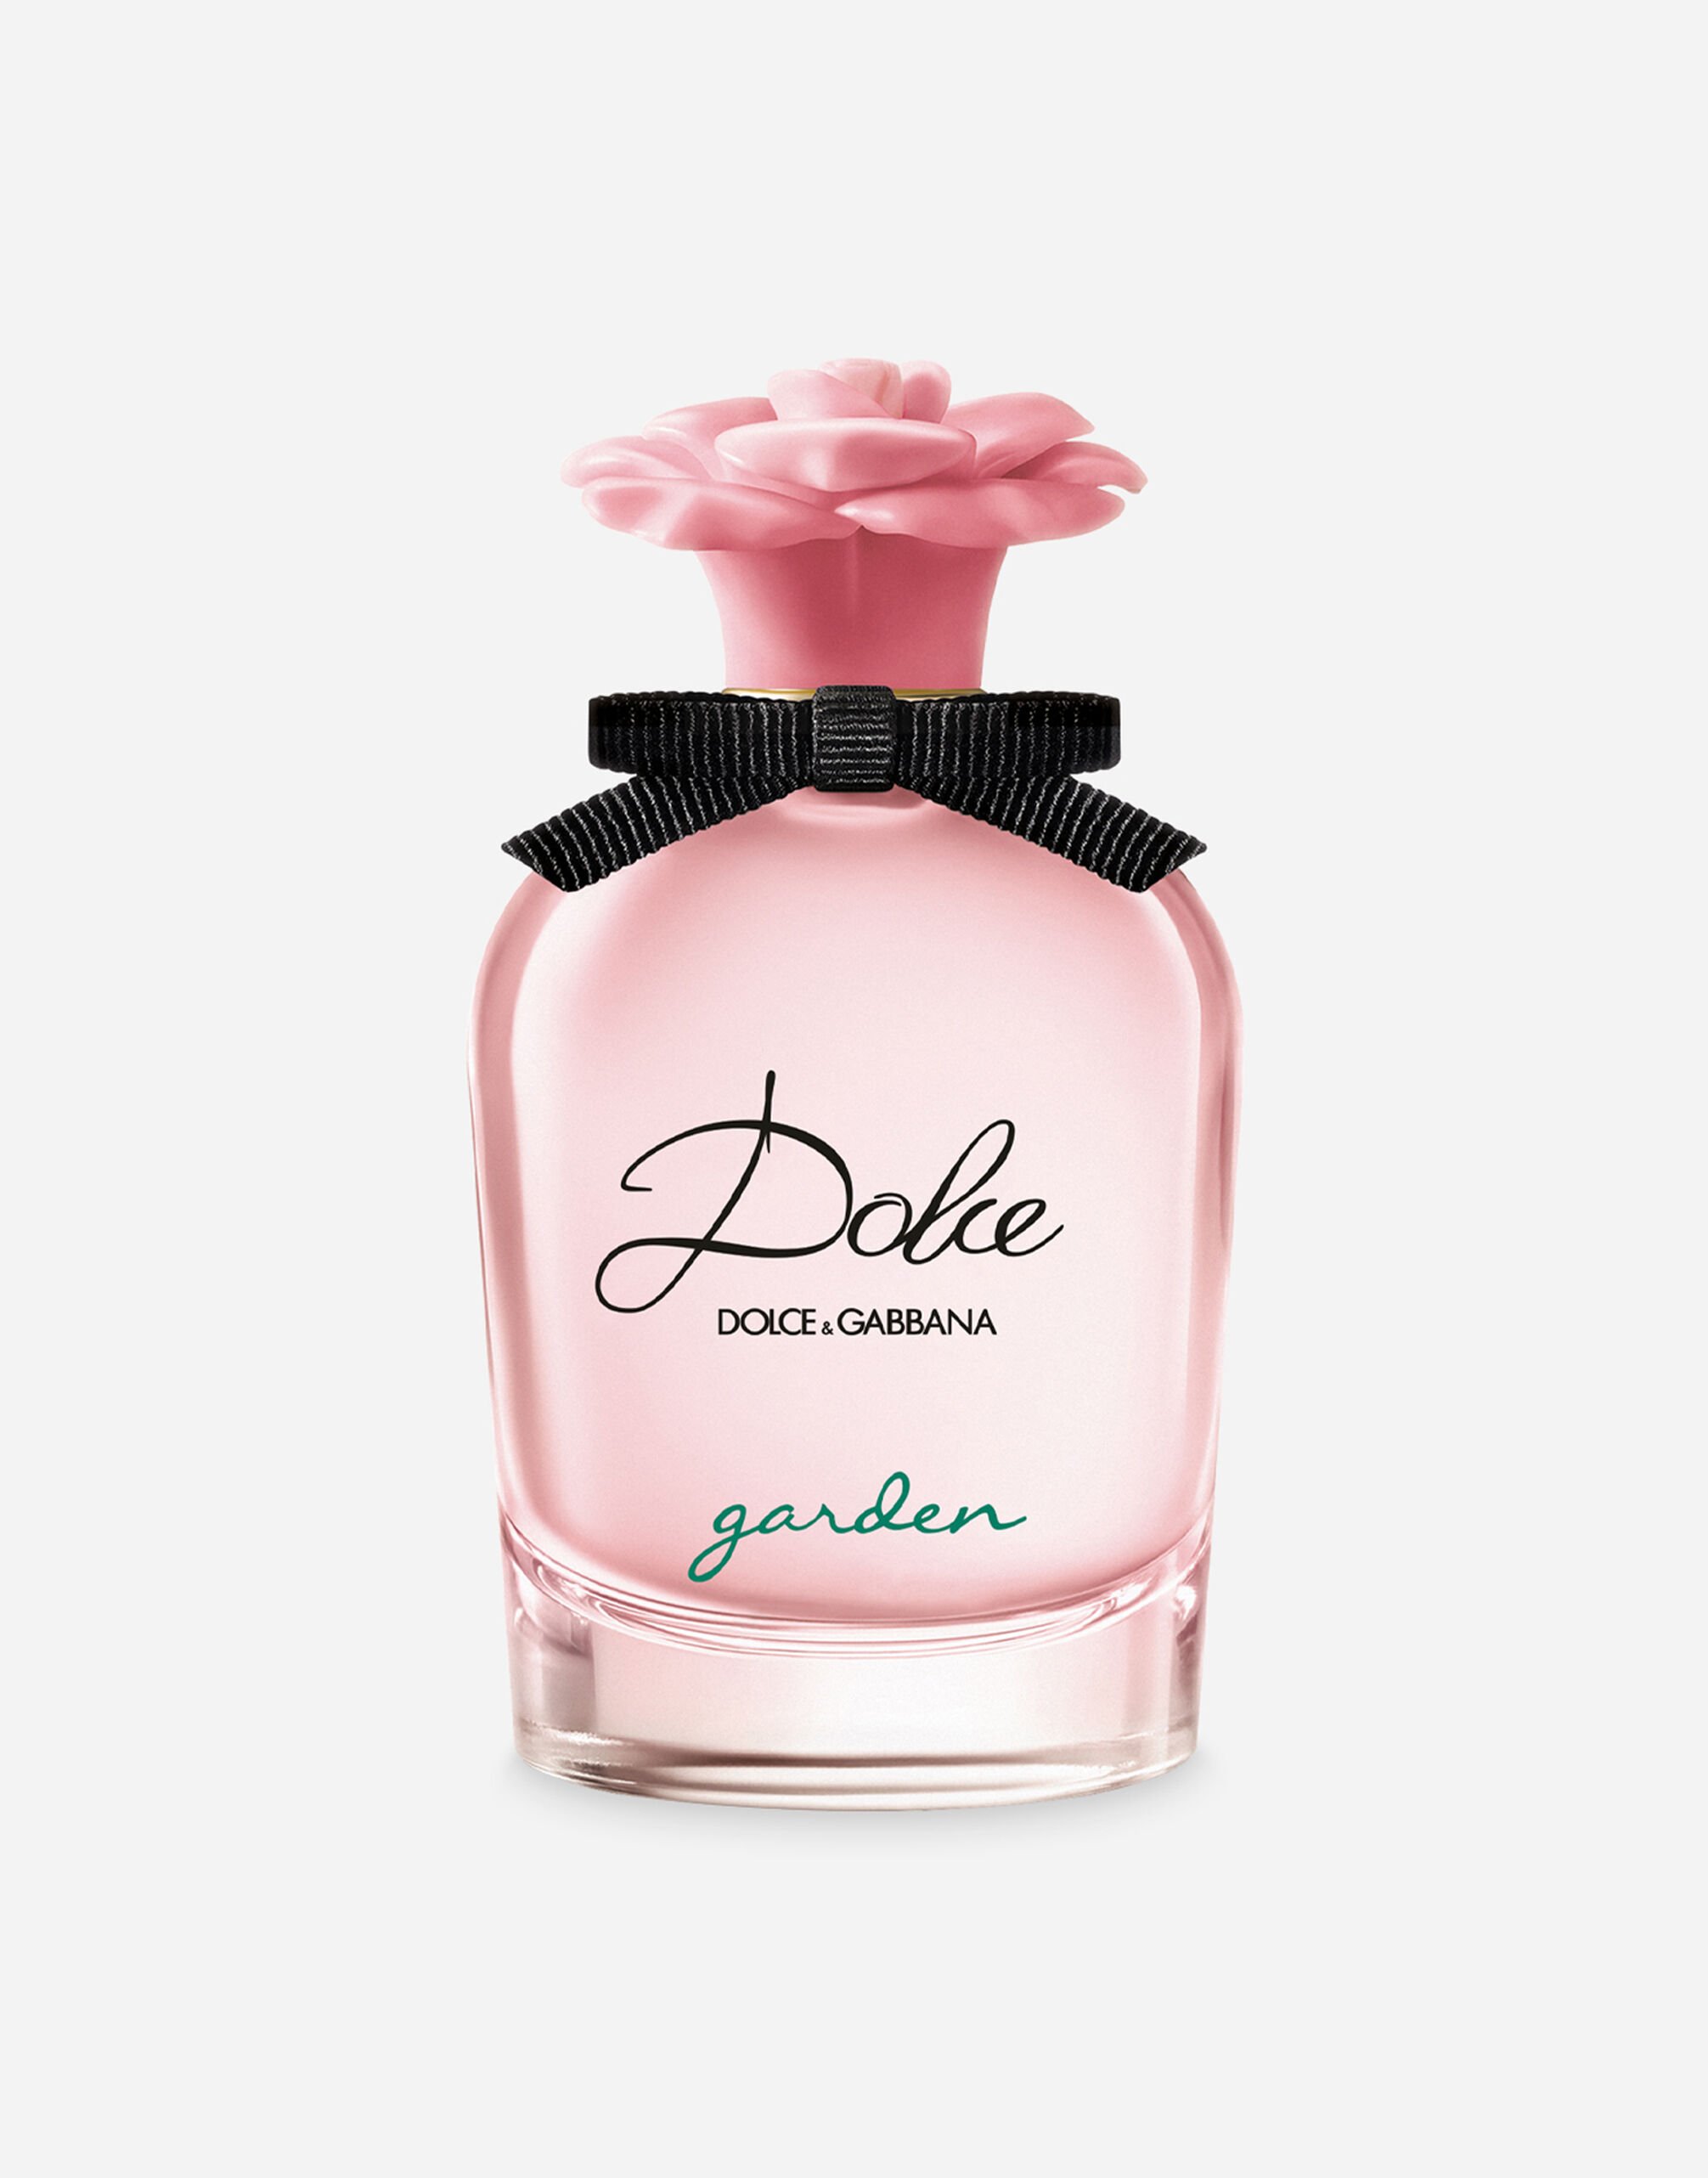 Dolce & Gabbana Dolce Garden Eau de Parfum - VT0063VT000